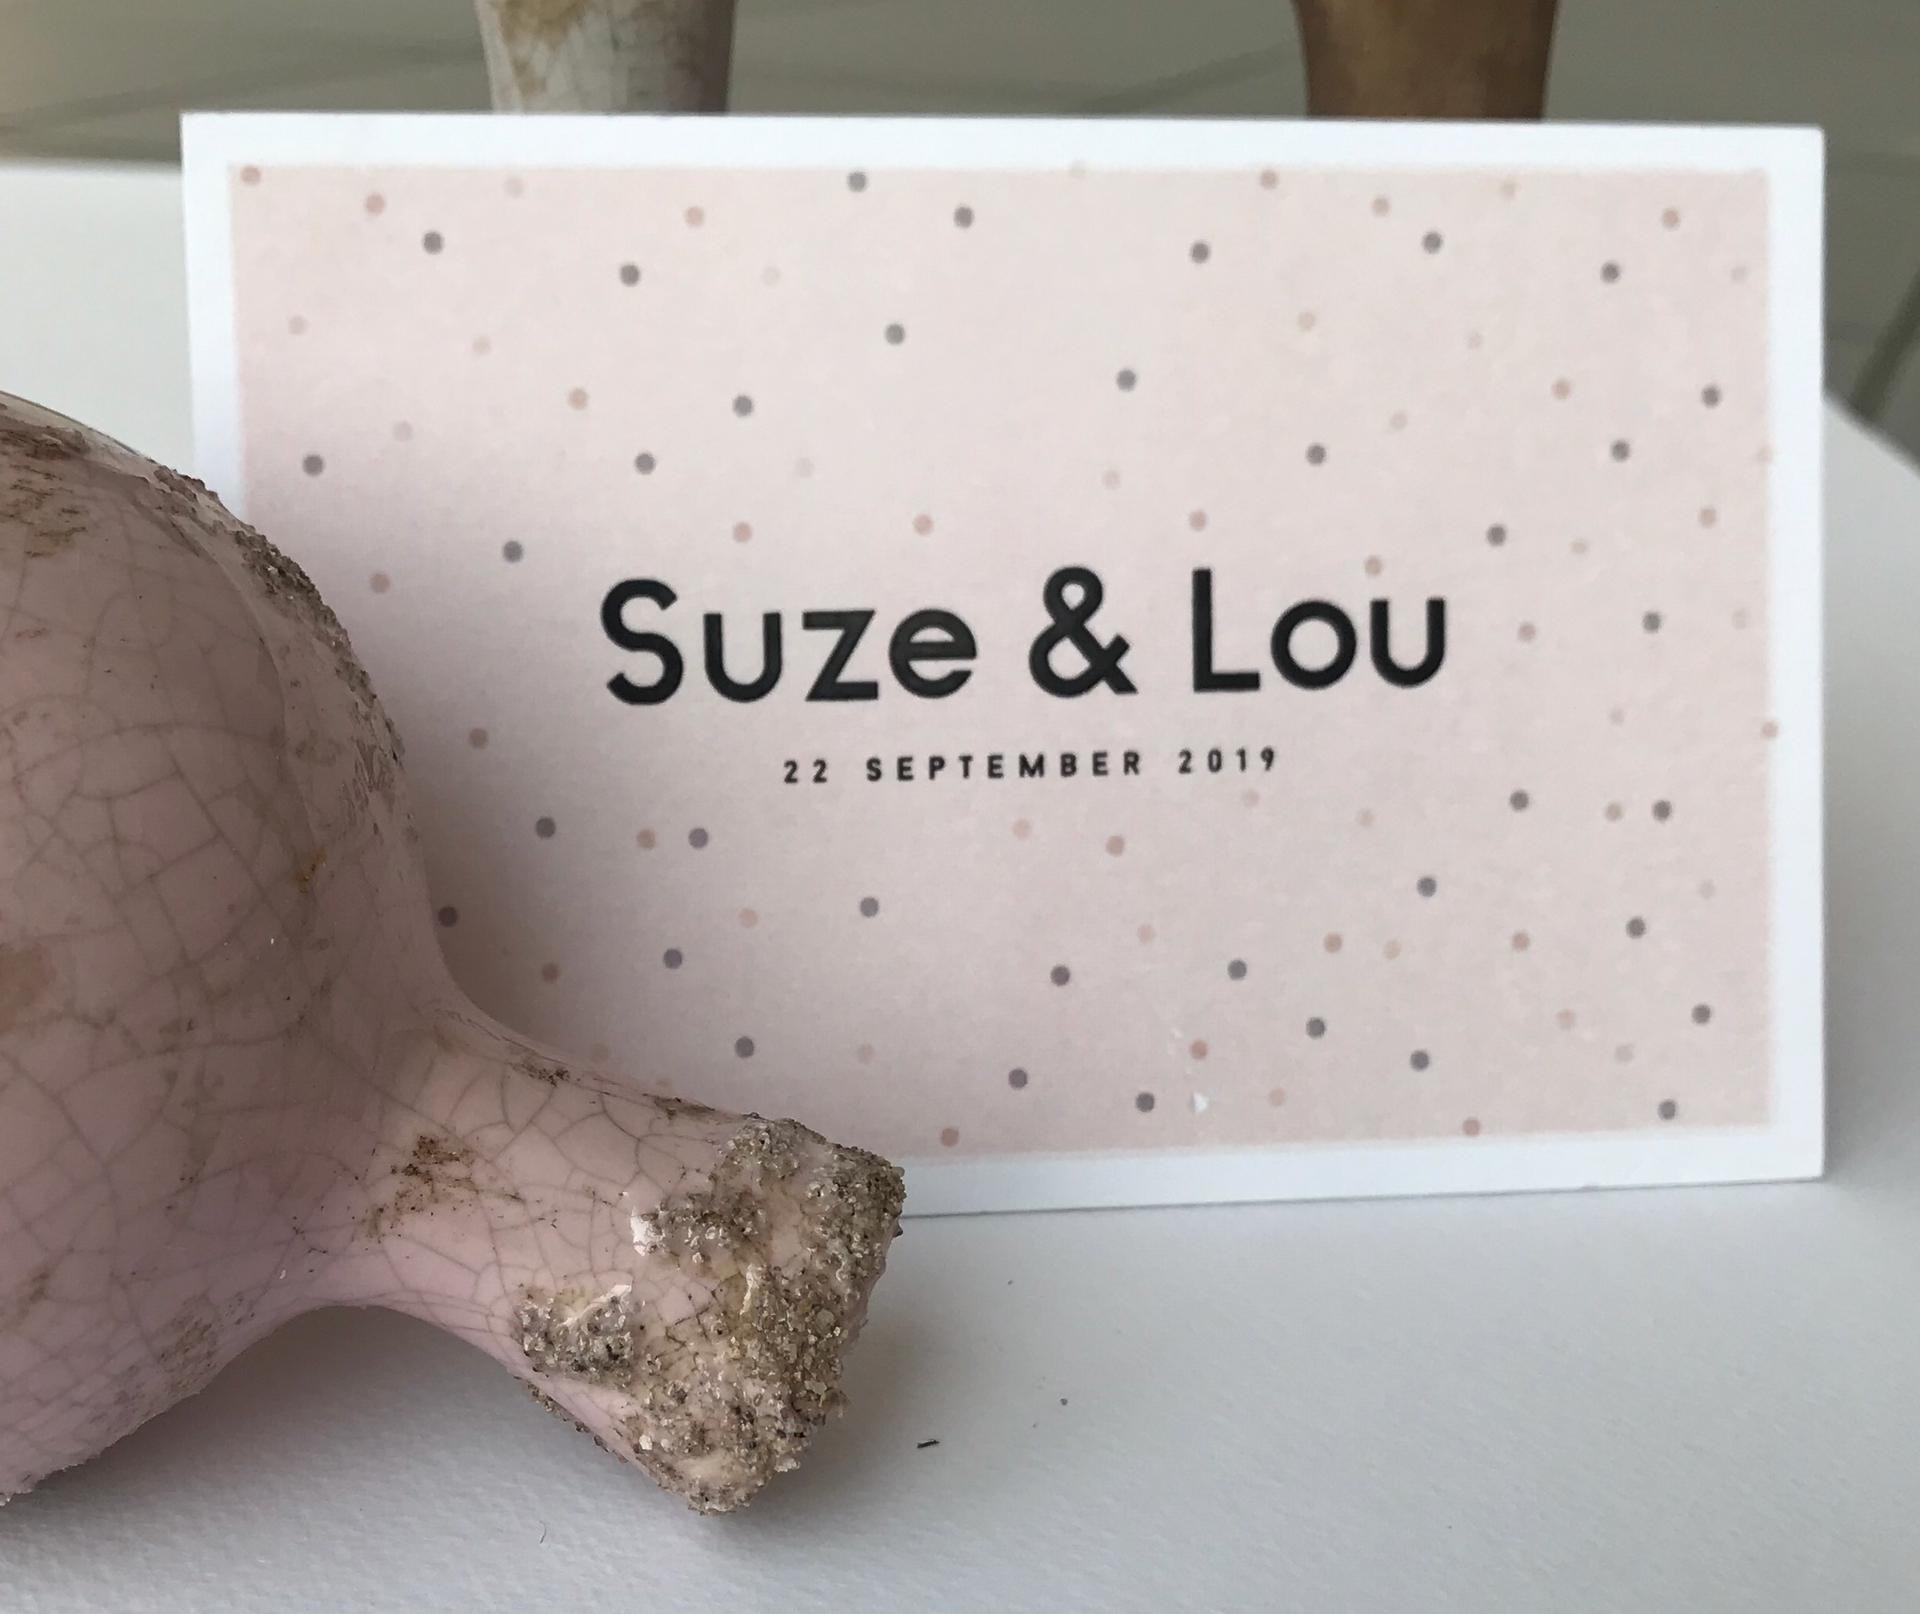 Suze & Lou